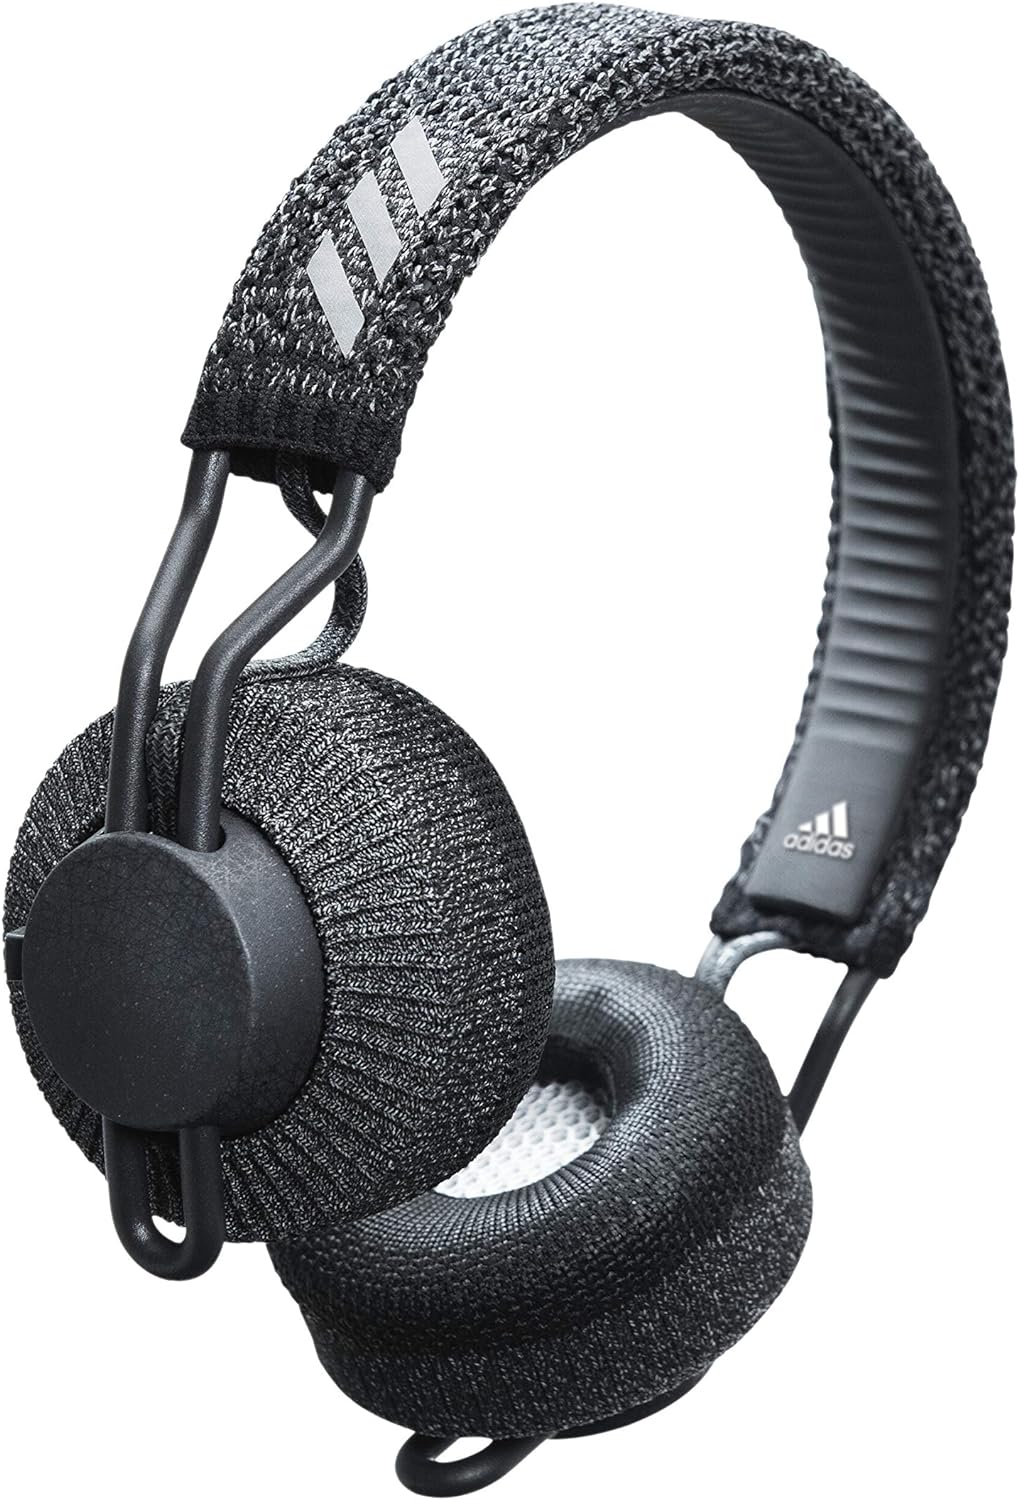 Adidas RPT-01 In-Ear Bluetooth Sports Headphones - Night Grey, 2.8 x 5.6 x 7.5 inches Refurbished